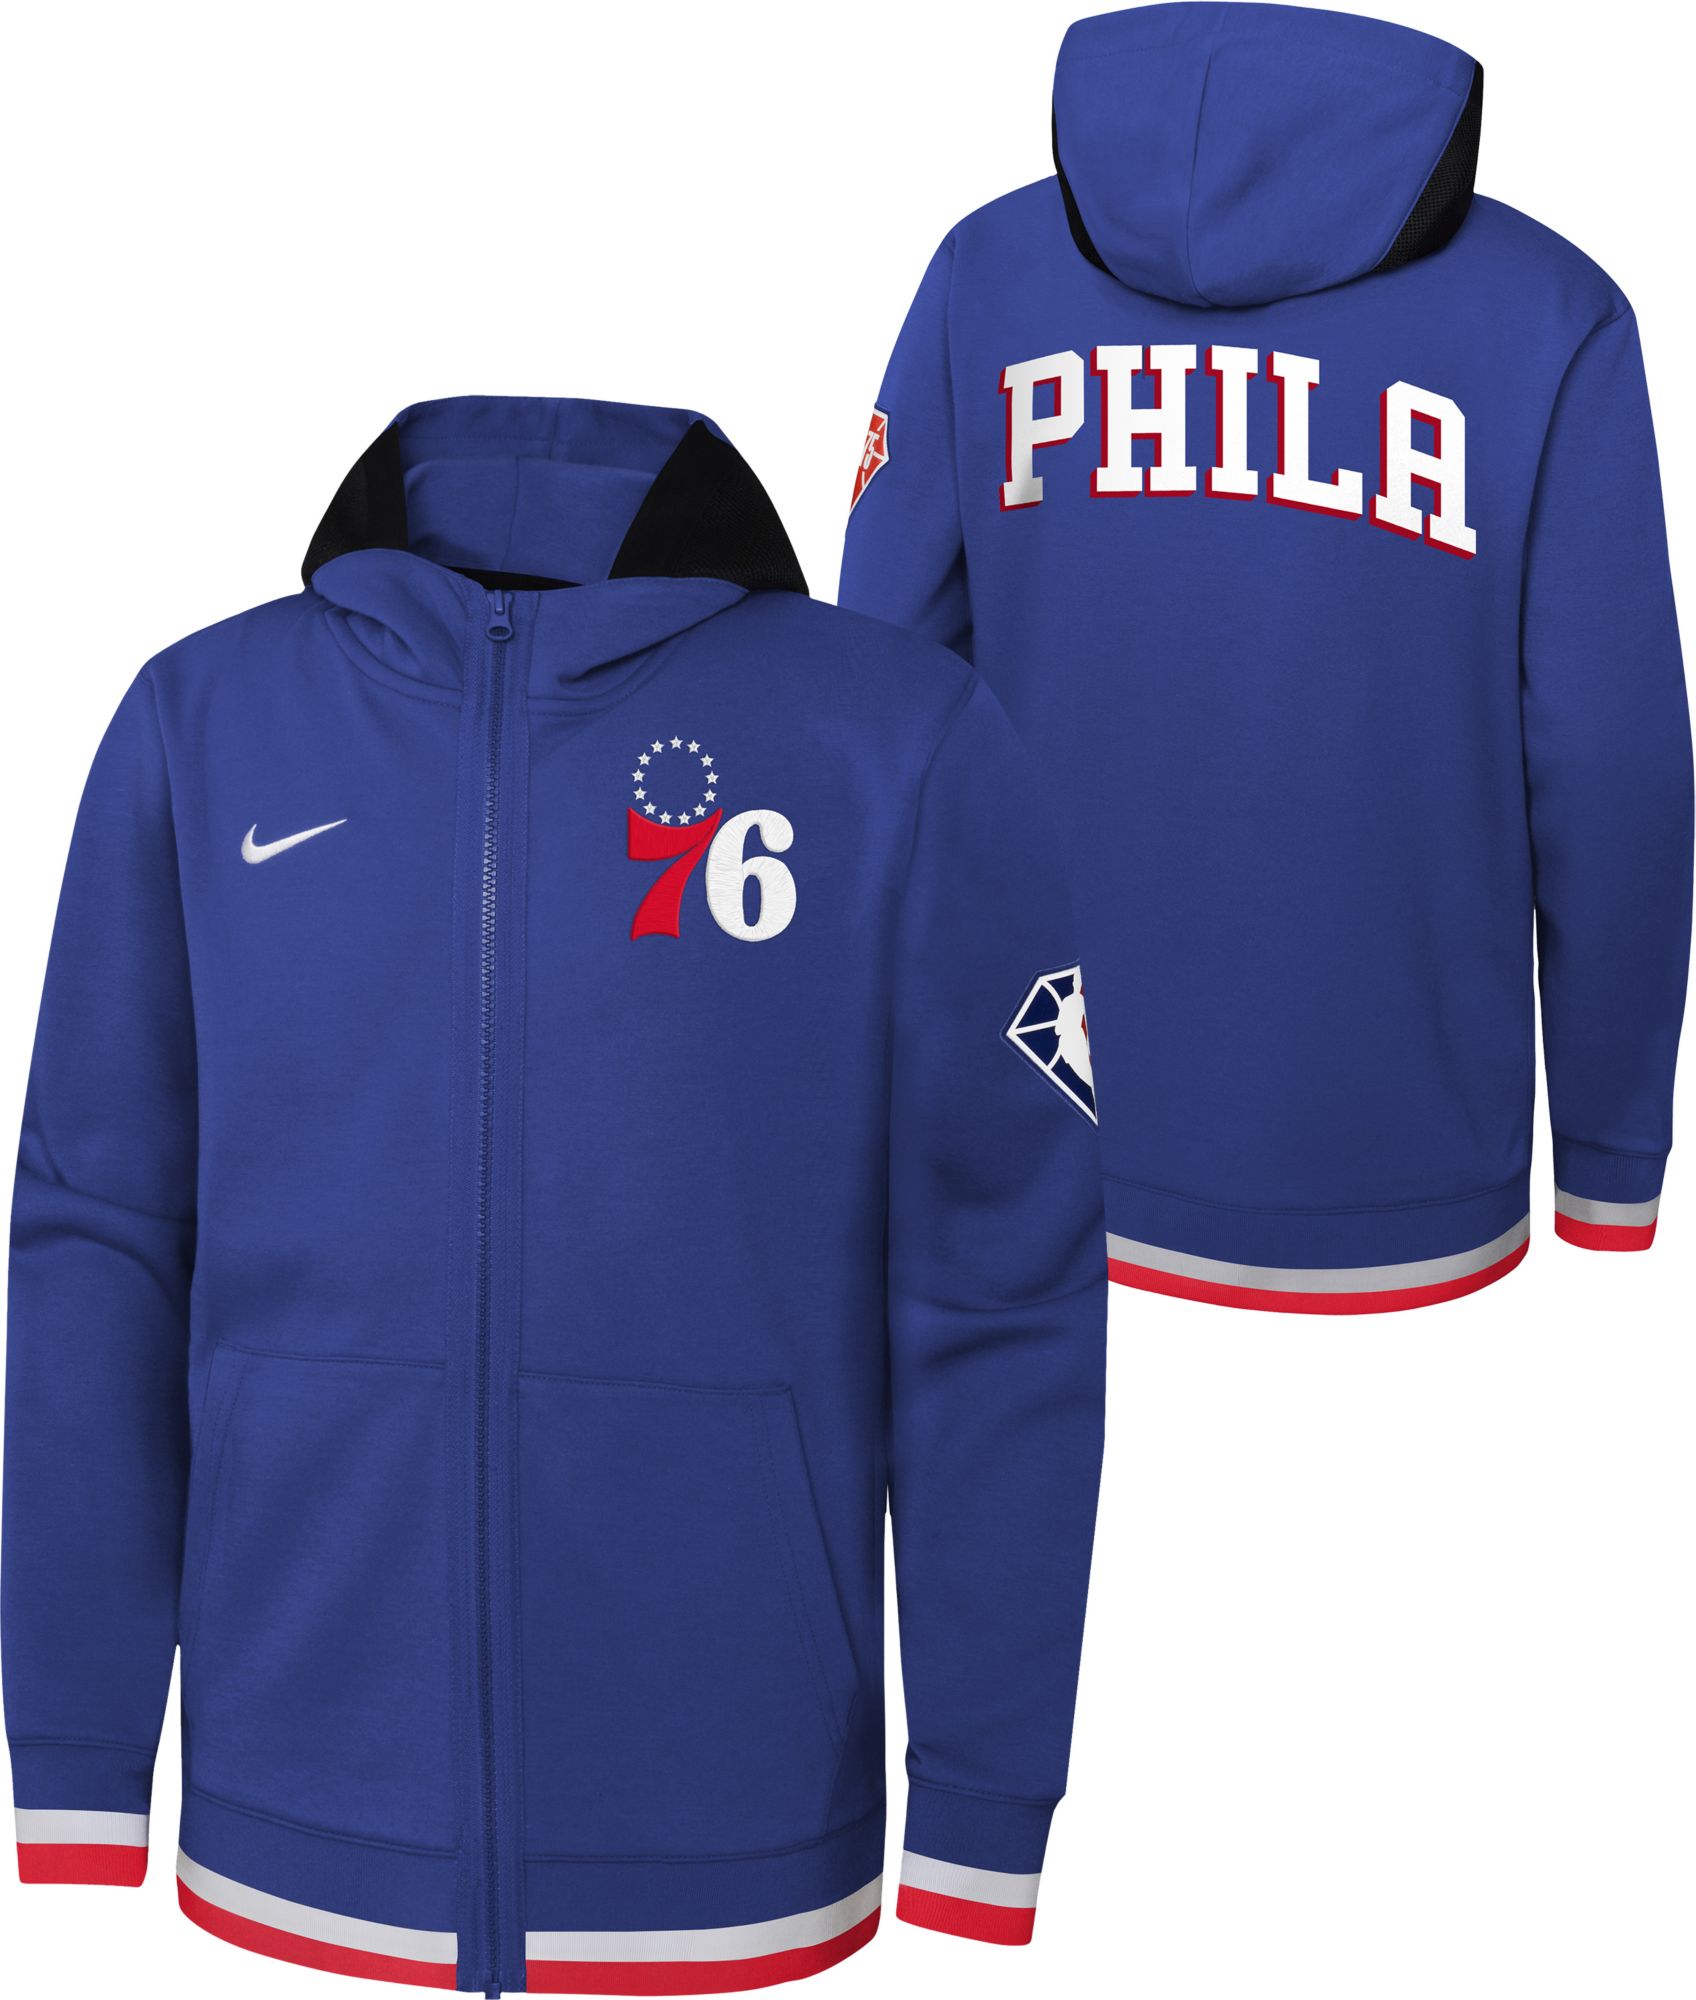 Nike Men's Philadelphia 76ers Dri-FIT Practice Long Sleeve Shirt